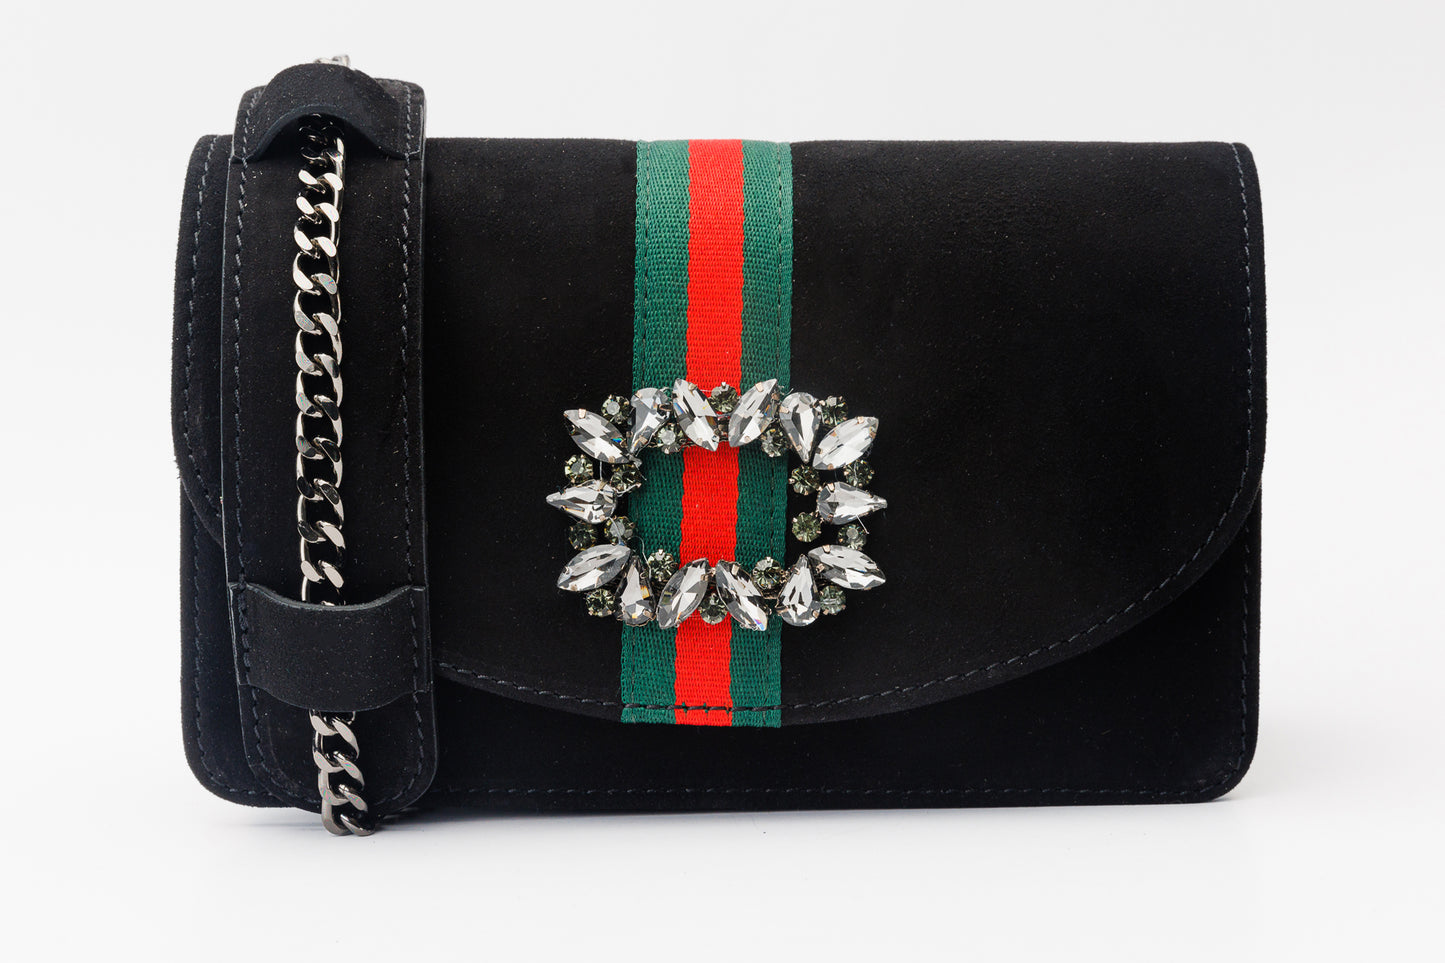 The Afega Black Suede Leather Handbag